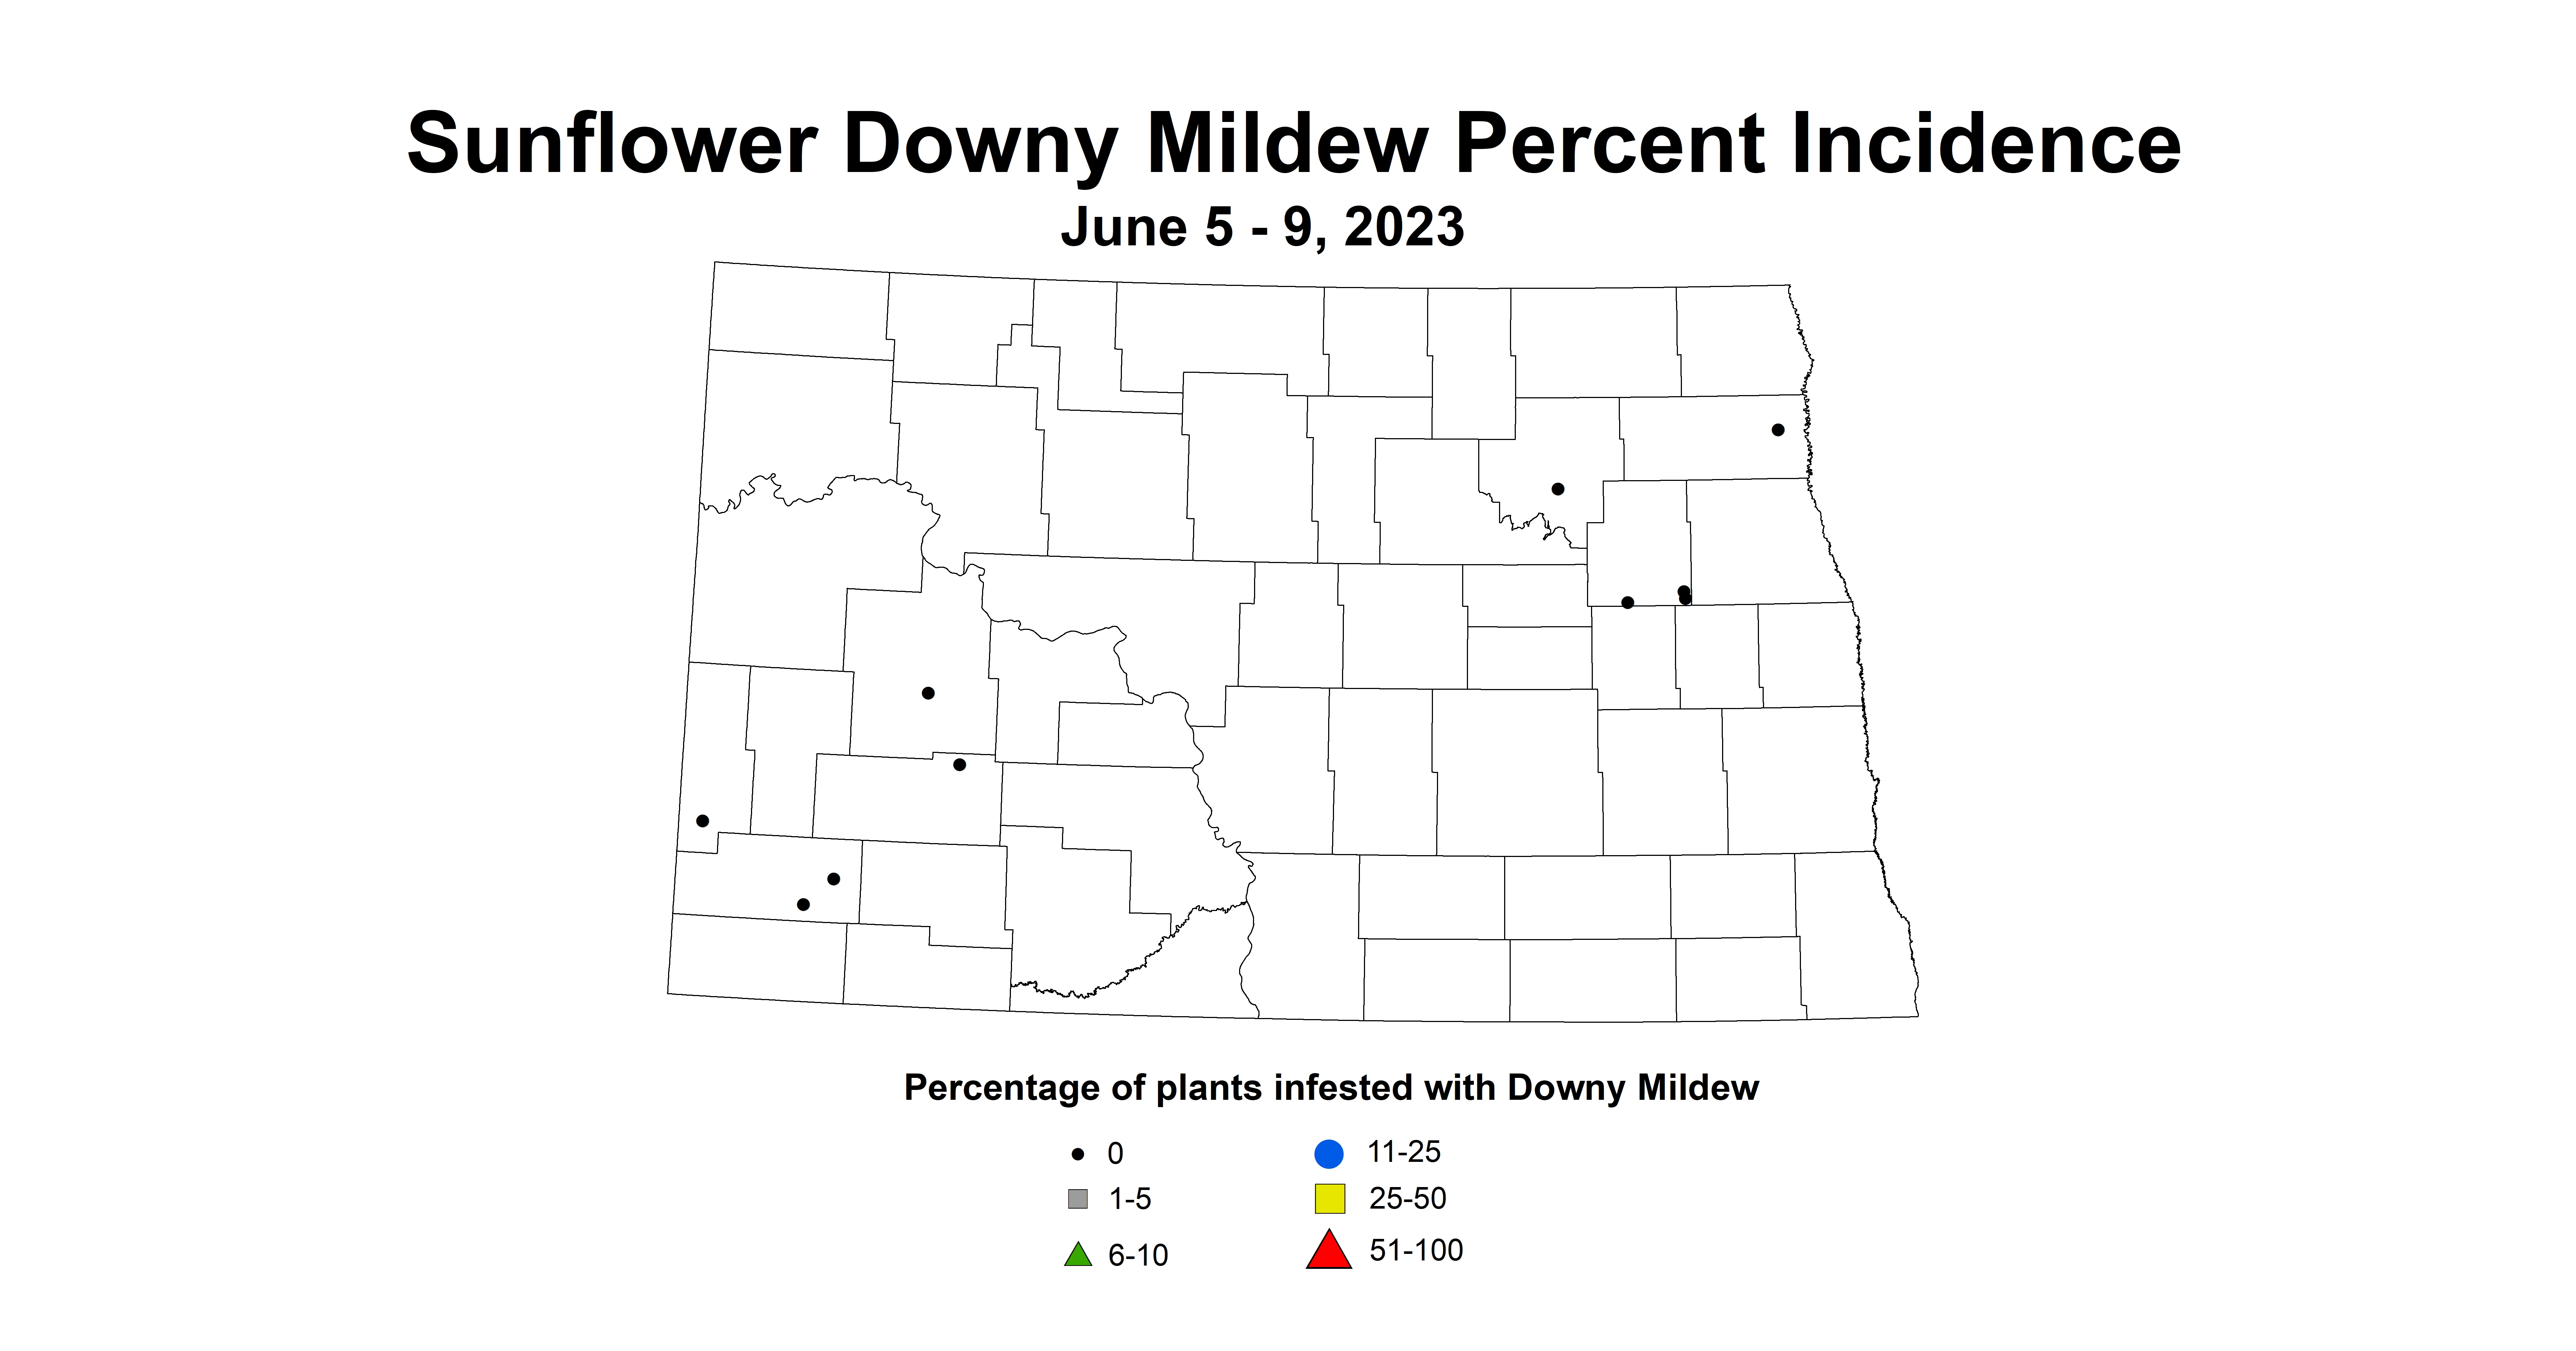 sunflower downy mildew percent incidence June 5-9 2023